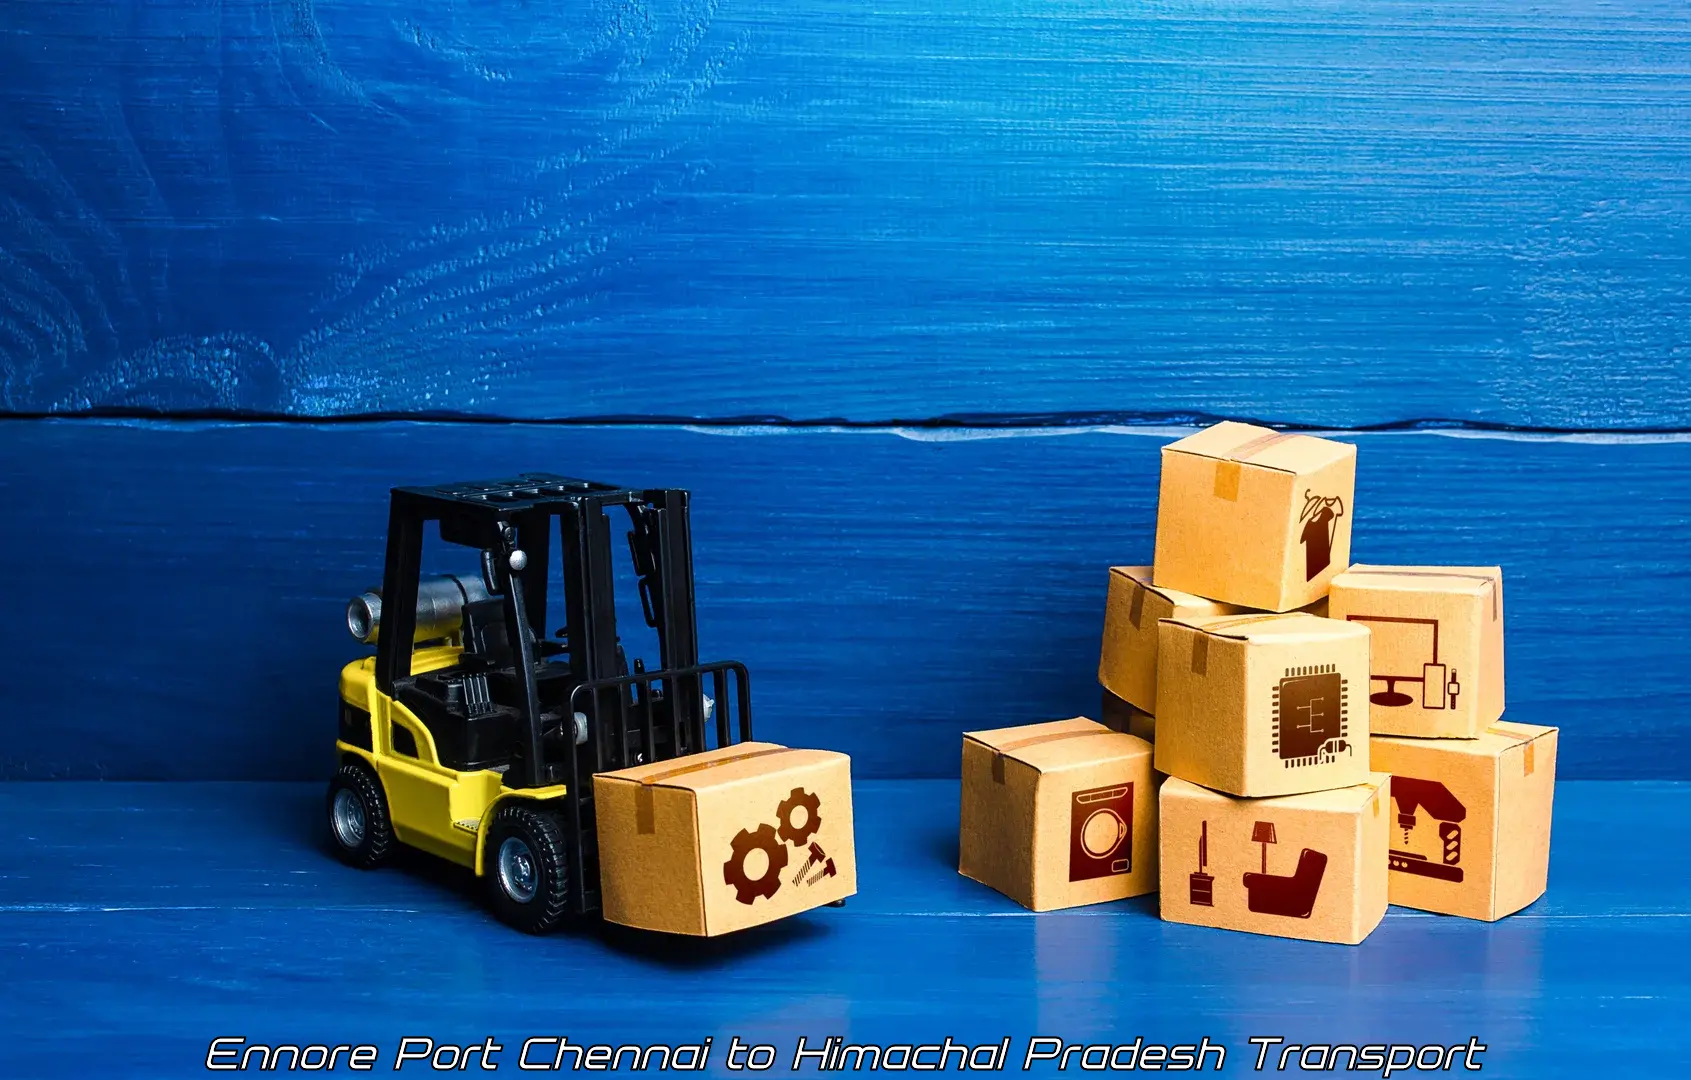 Two wheeler parcel service Ennore Port Chennai to Himachal Pradesh